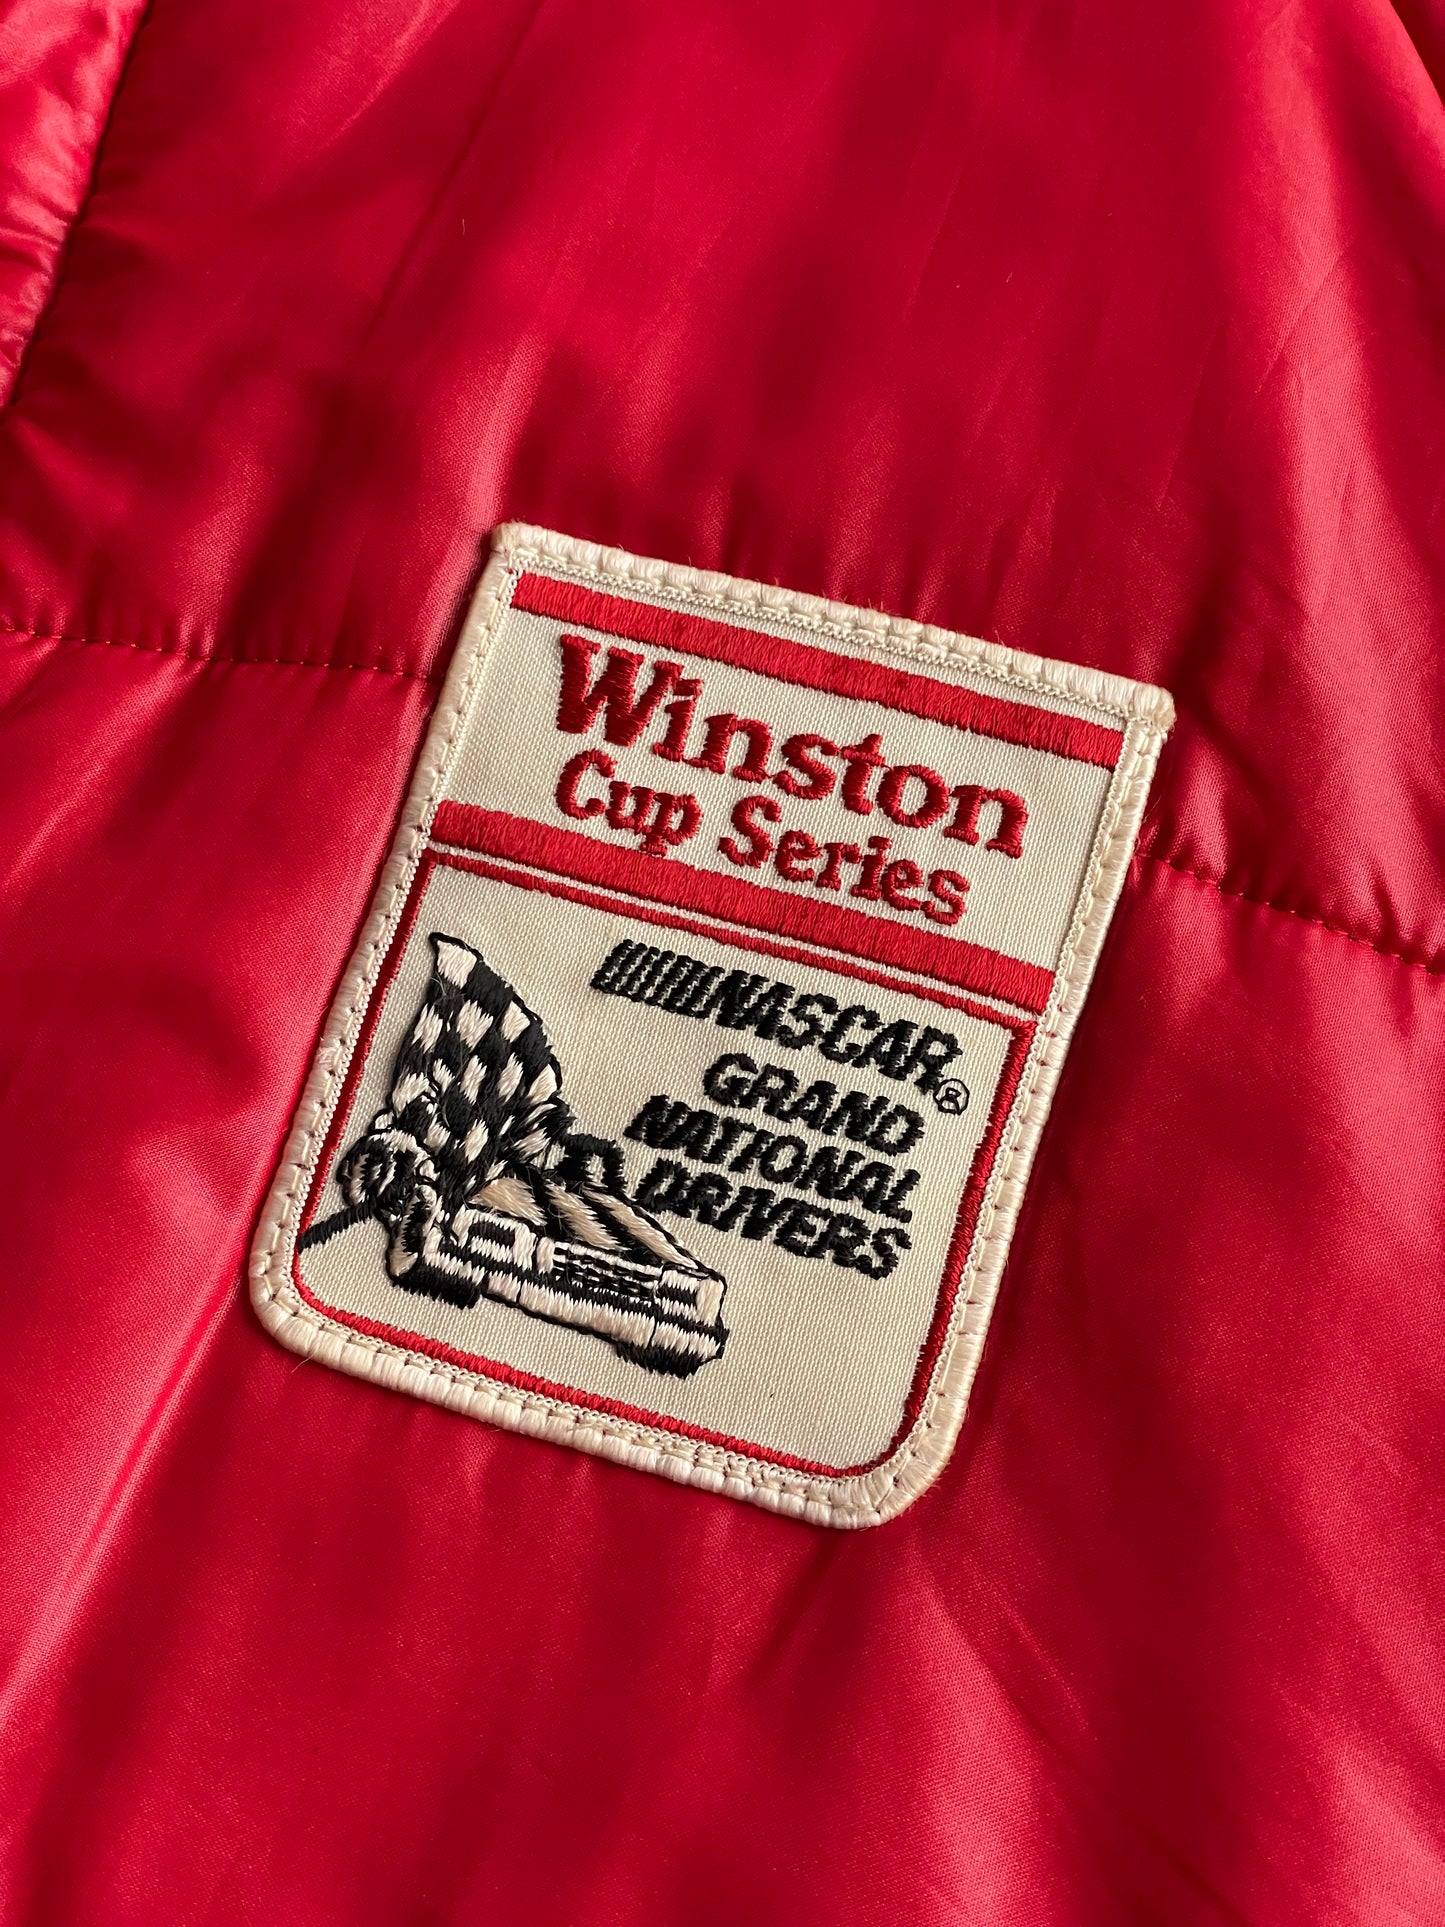 Daytona Racing Jacket [L/XL]